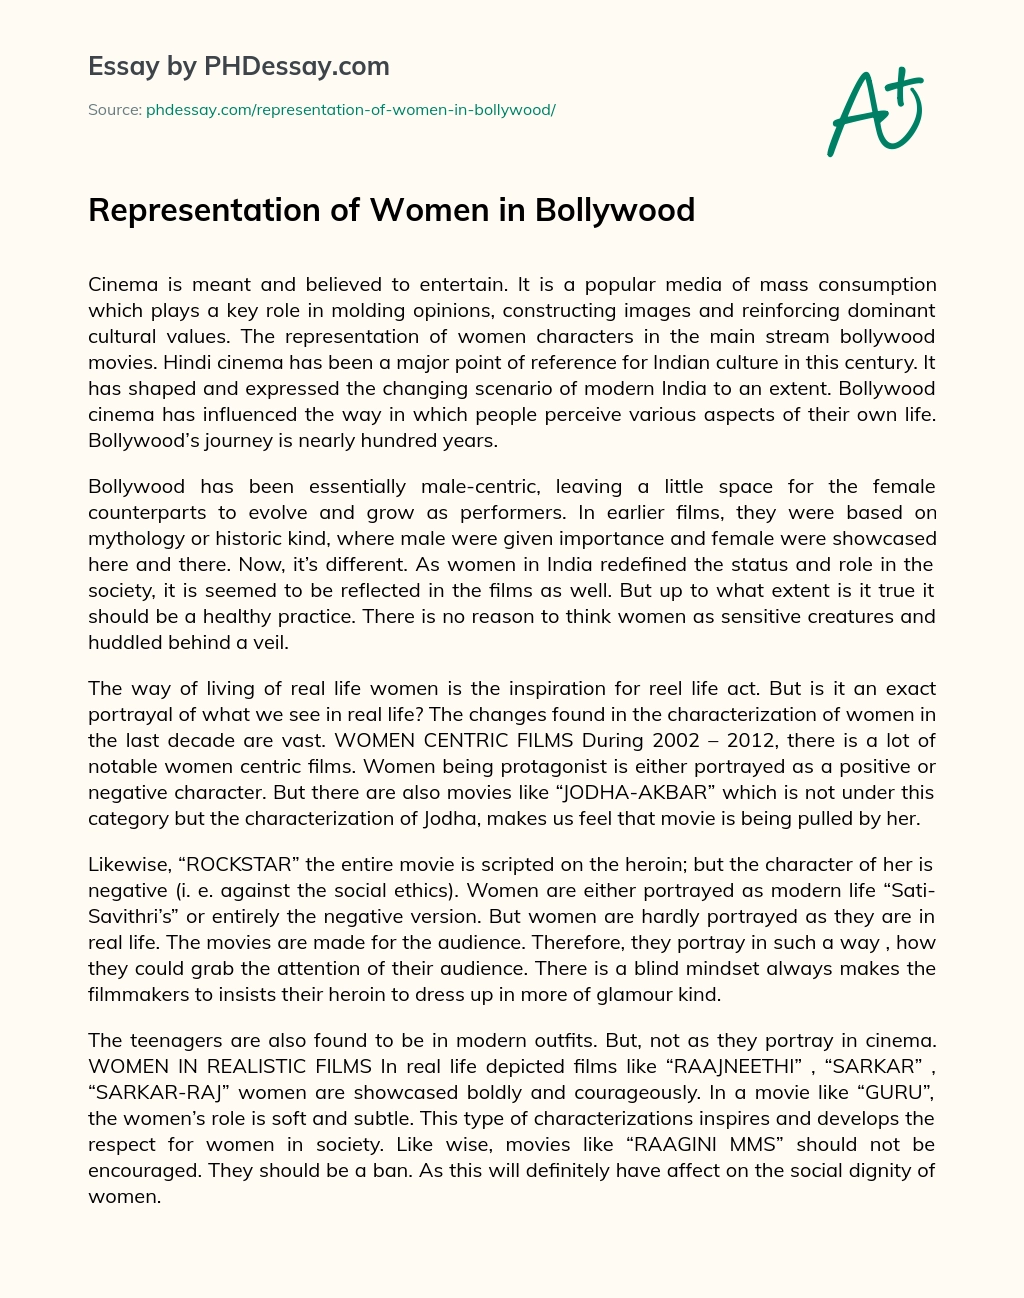 Representation of Women in Bollywood essay